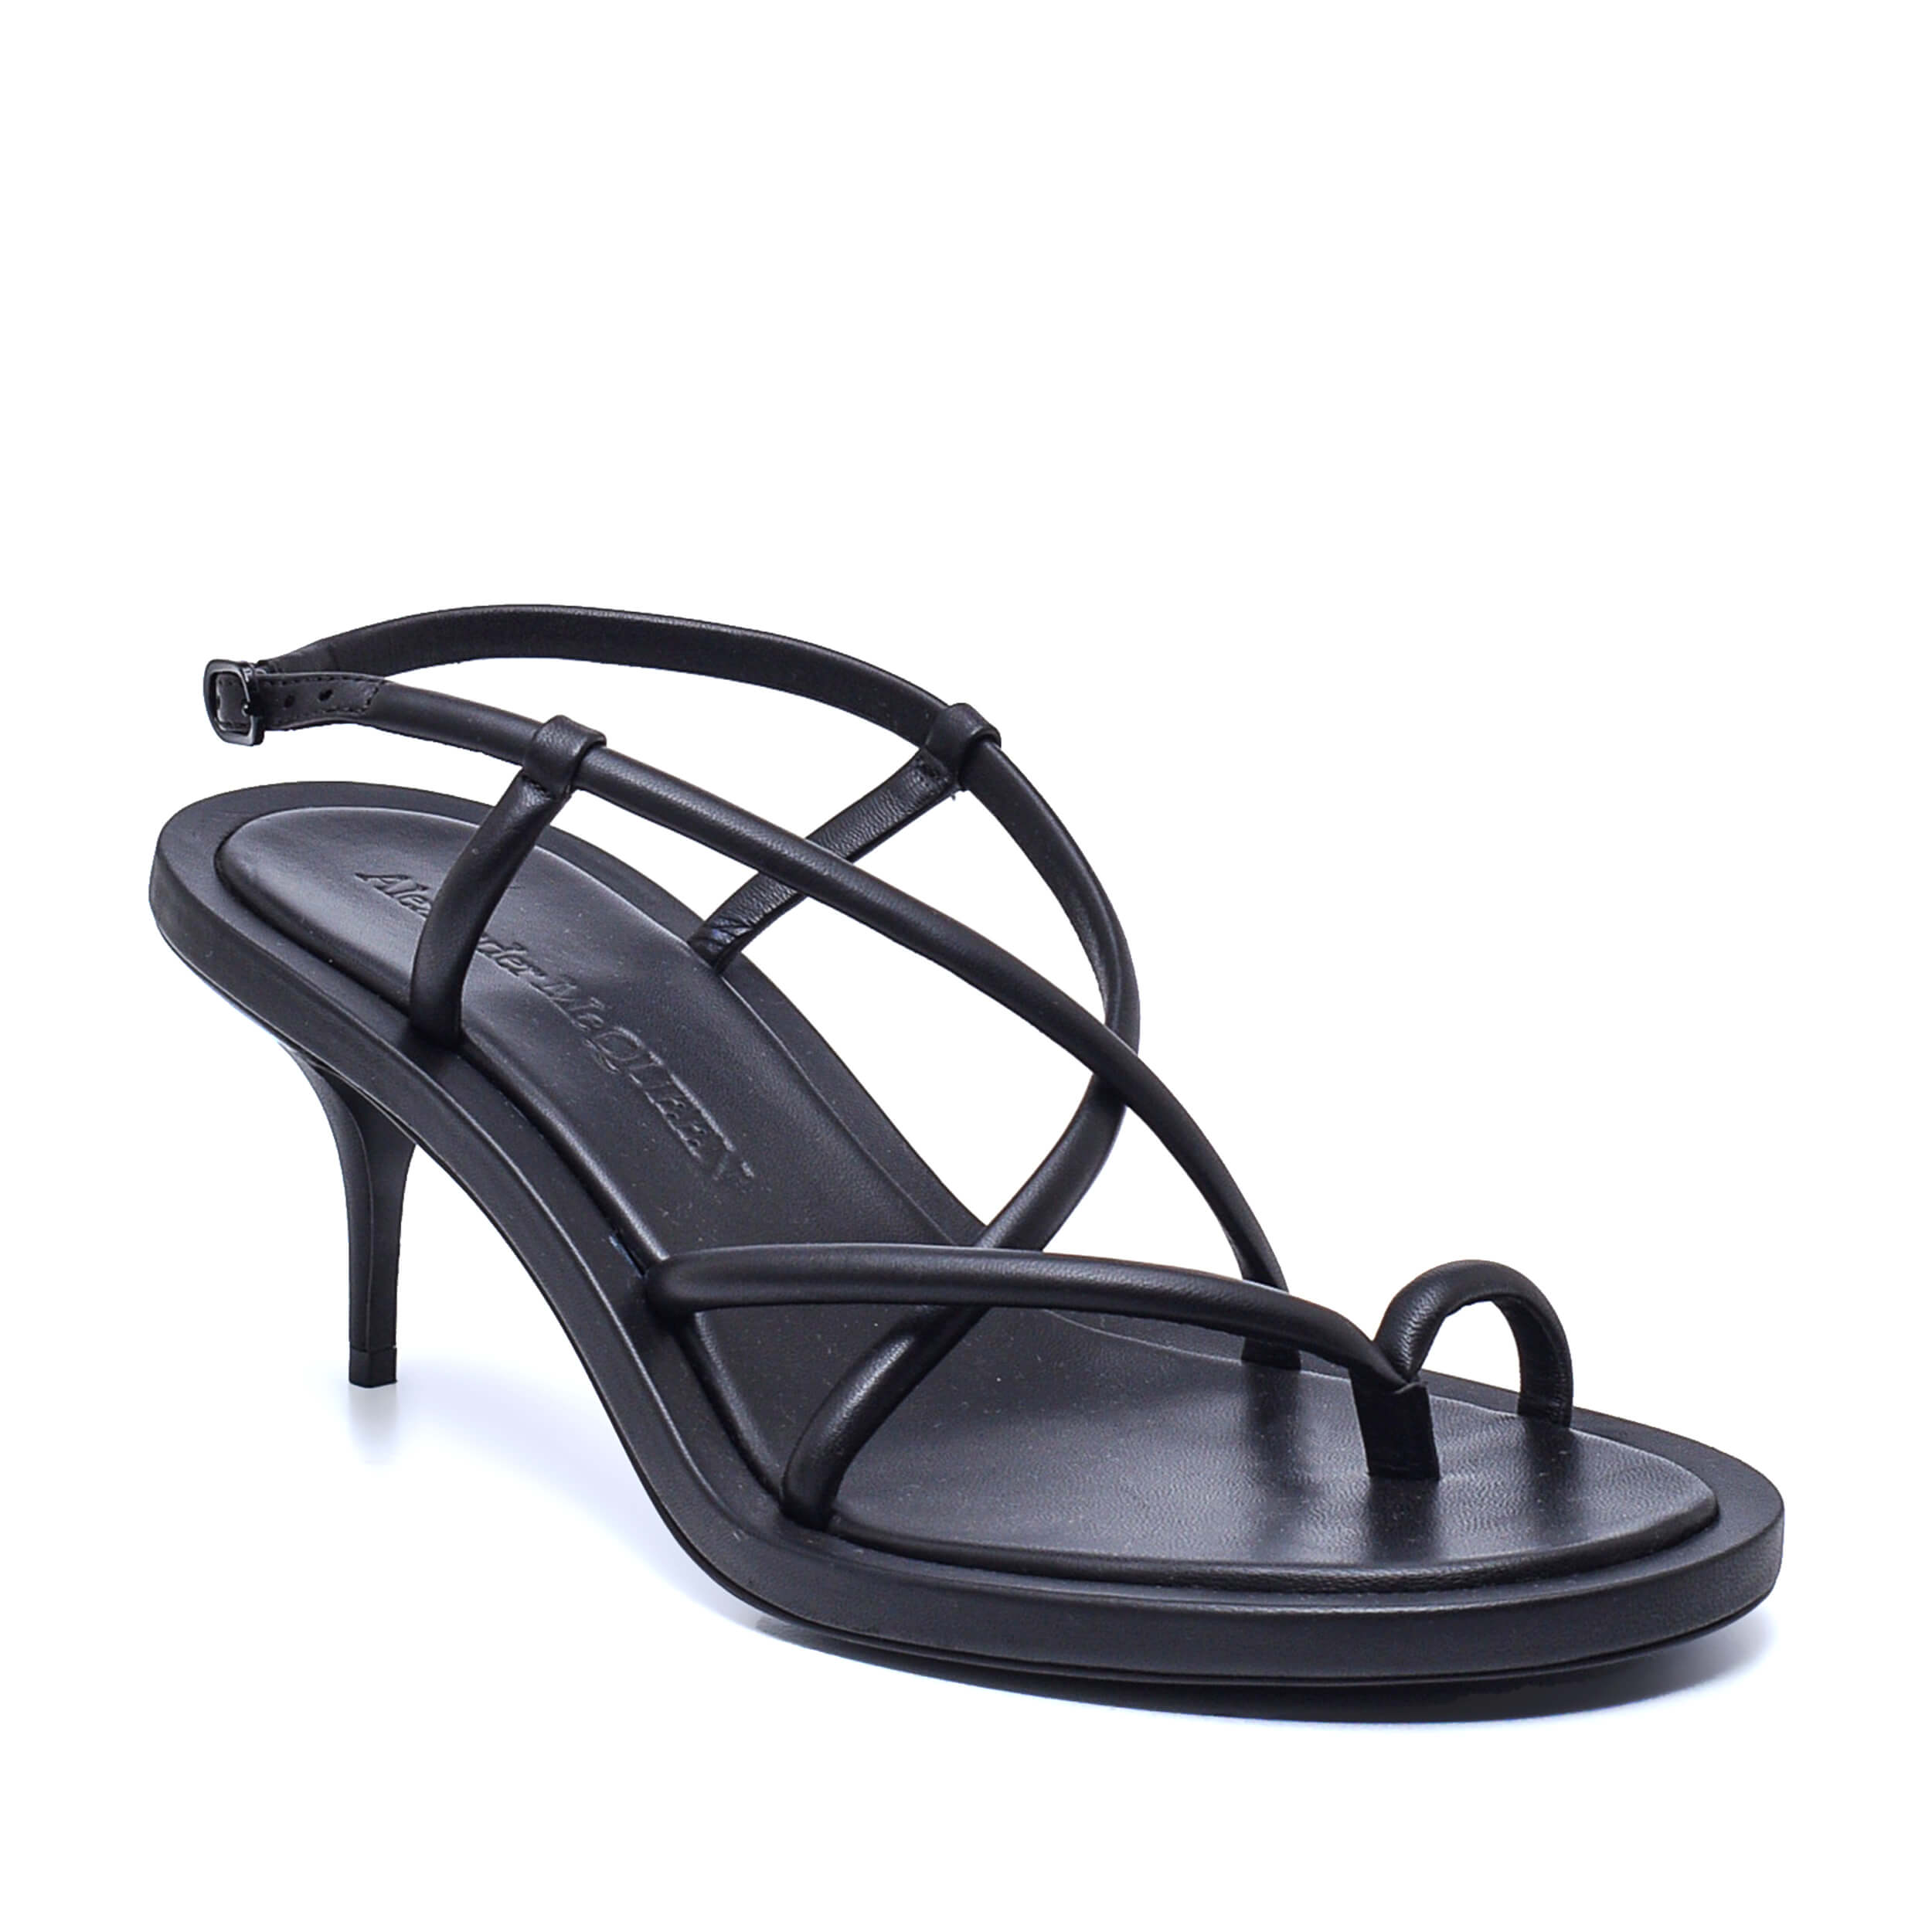 Alexander McQueen - Black Leather Pump Sandals / 38.5